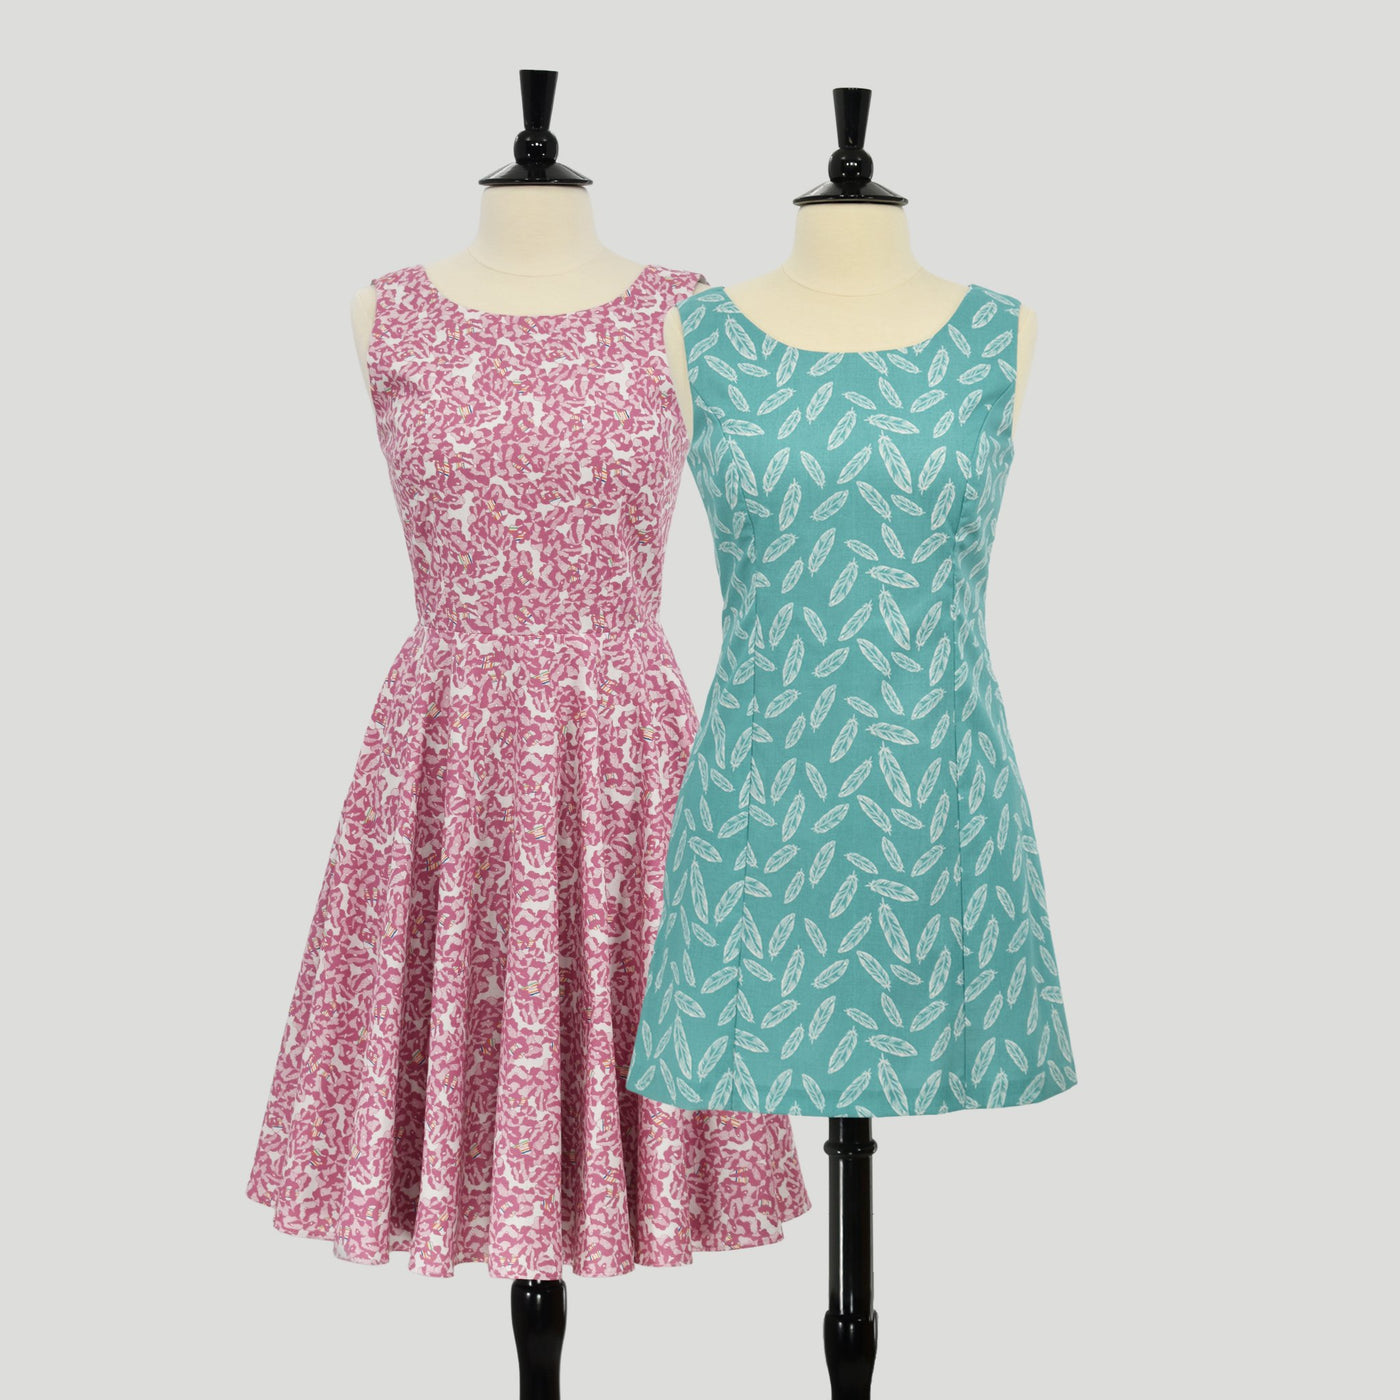 Elderberry tea dress and Gilia scooter dress on dress forms